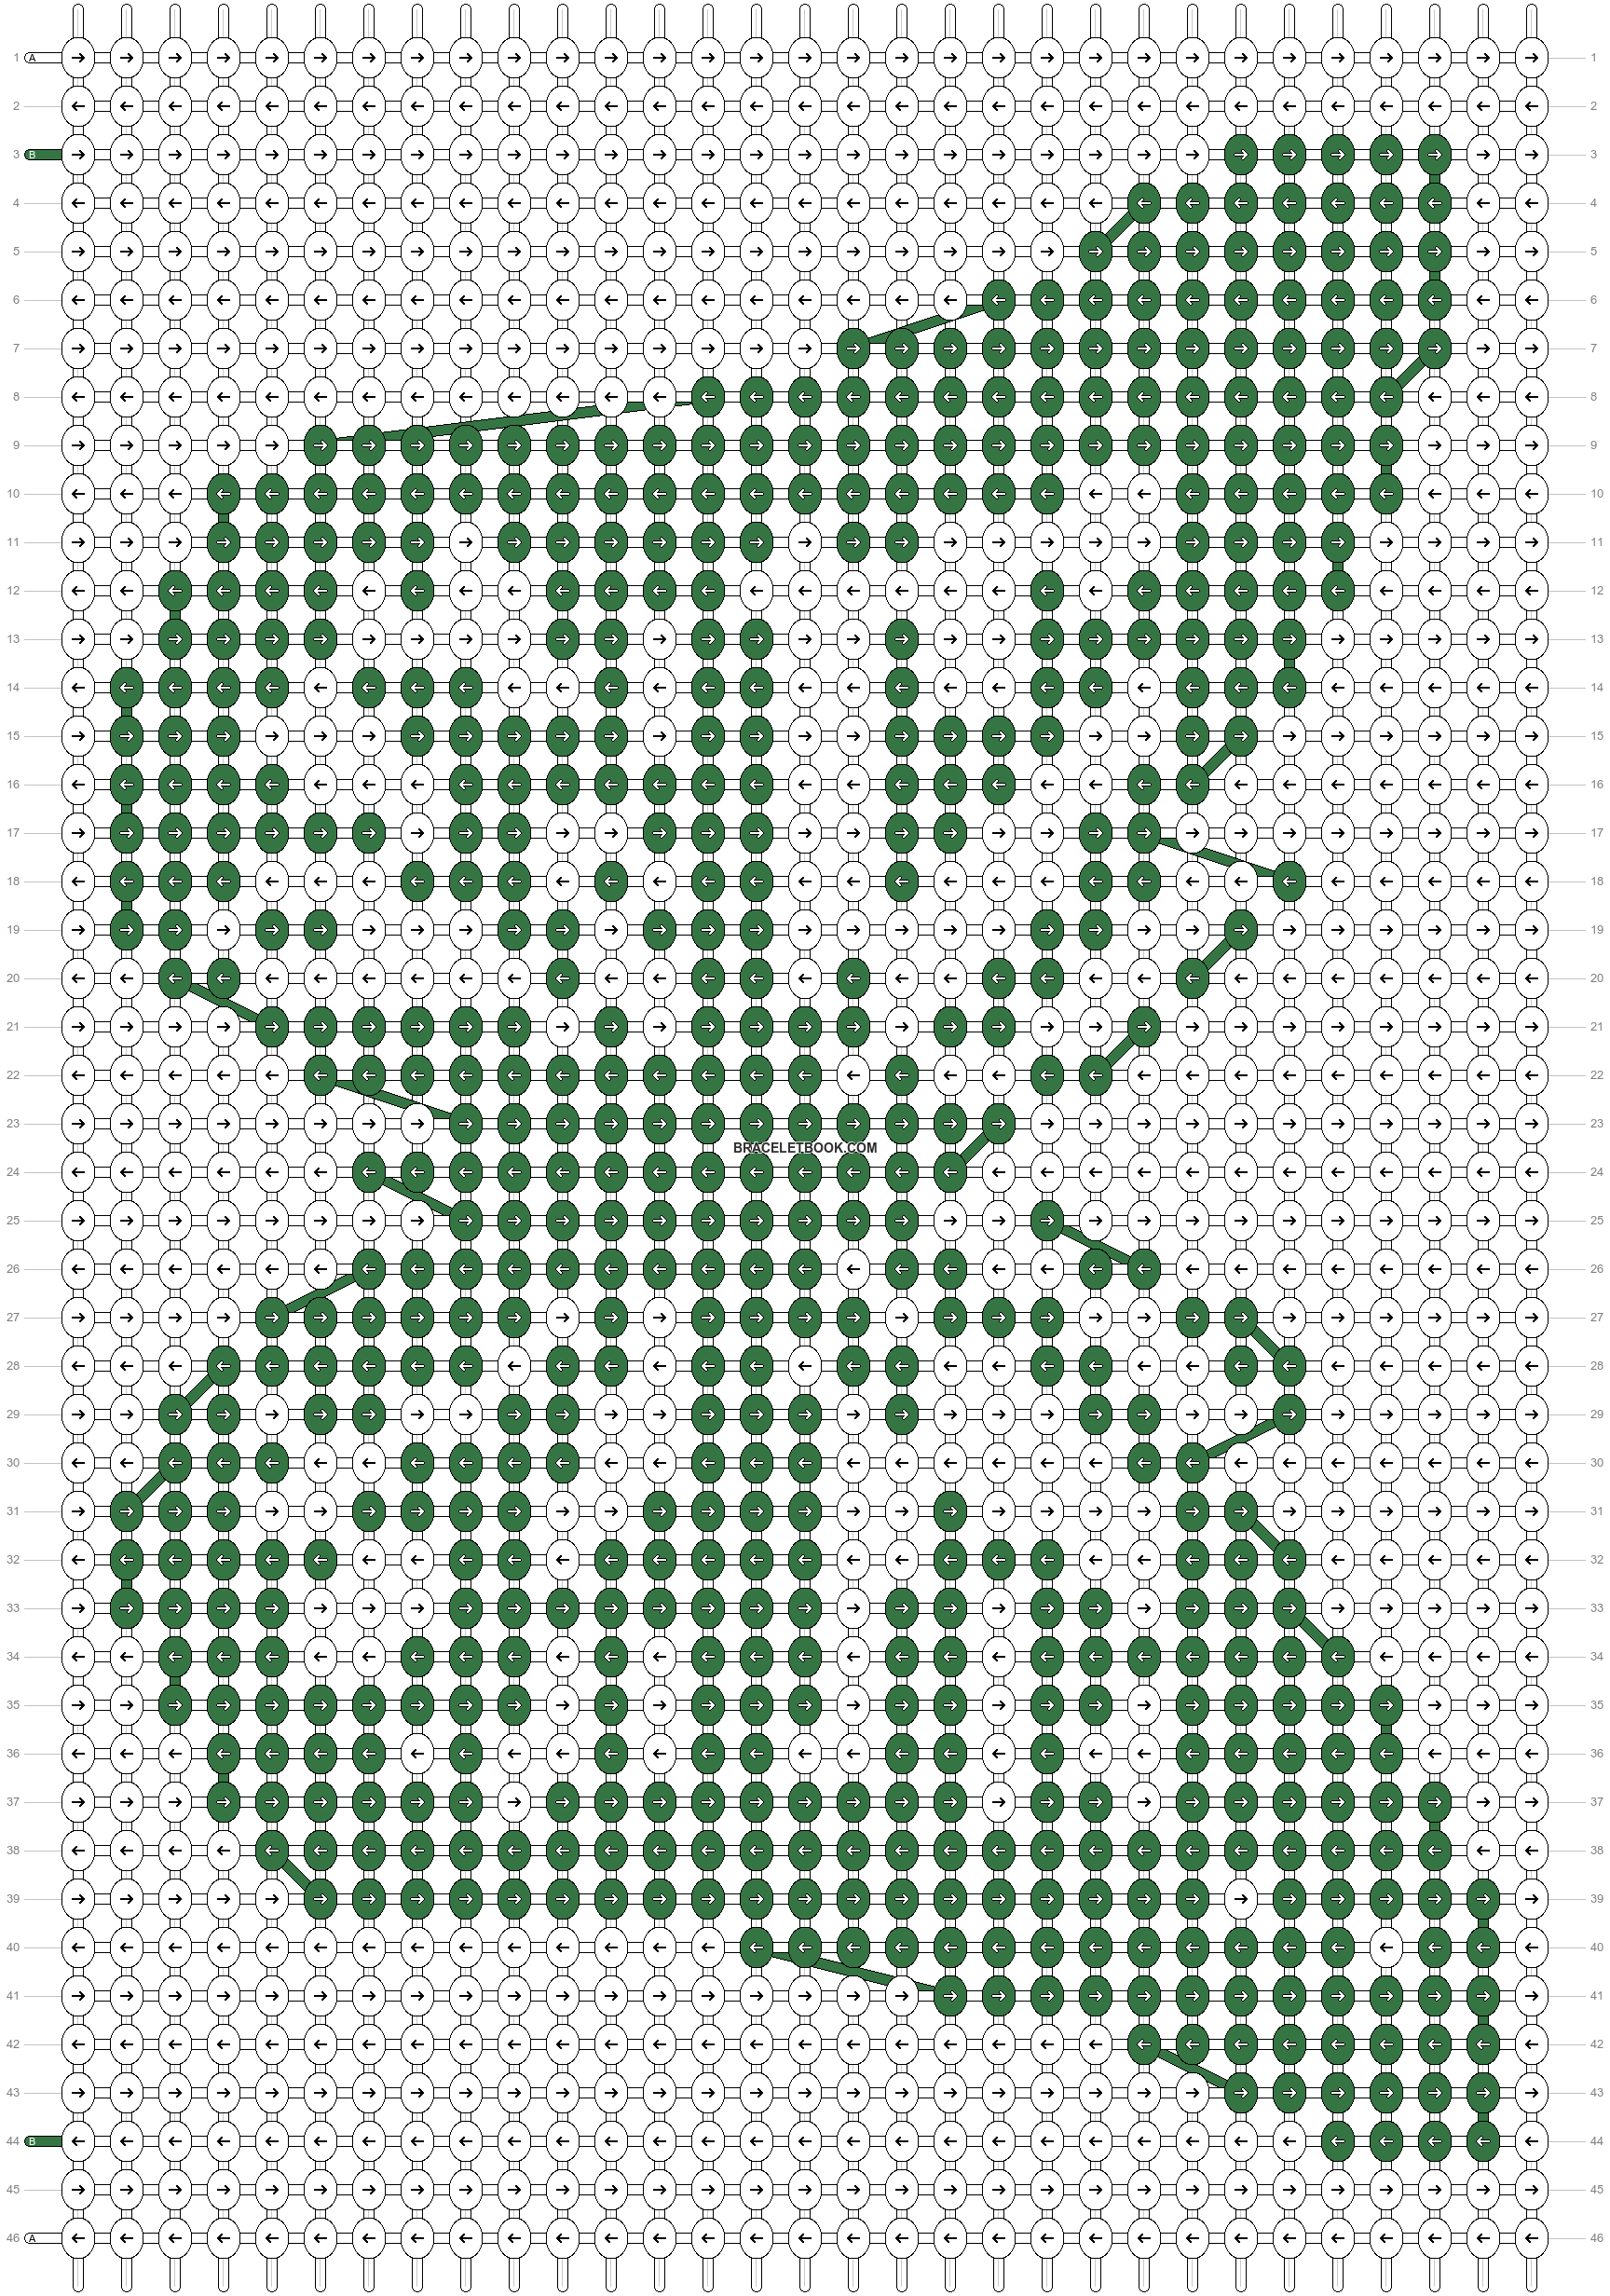 Alpha pattern #51210 variation #135761 pattern